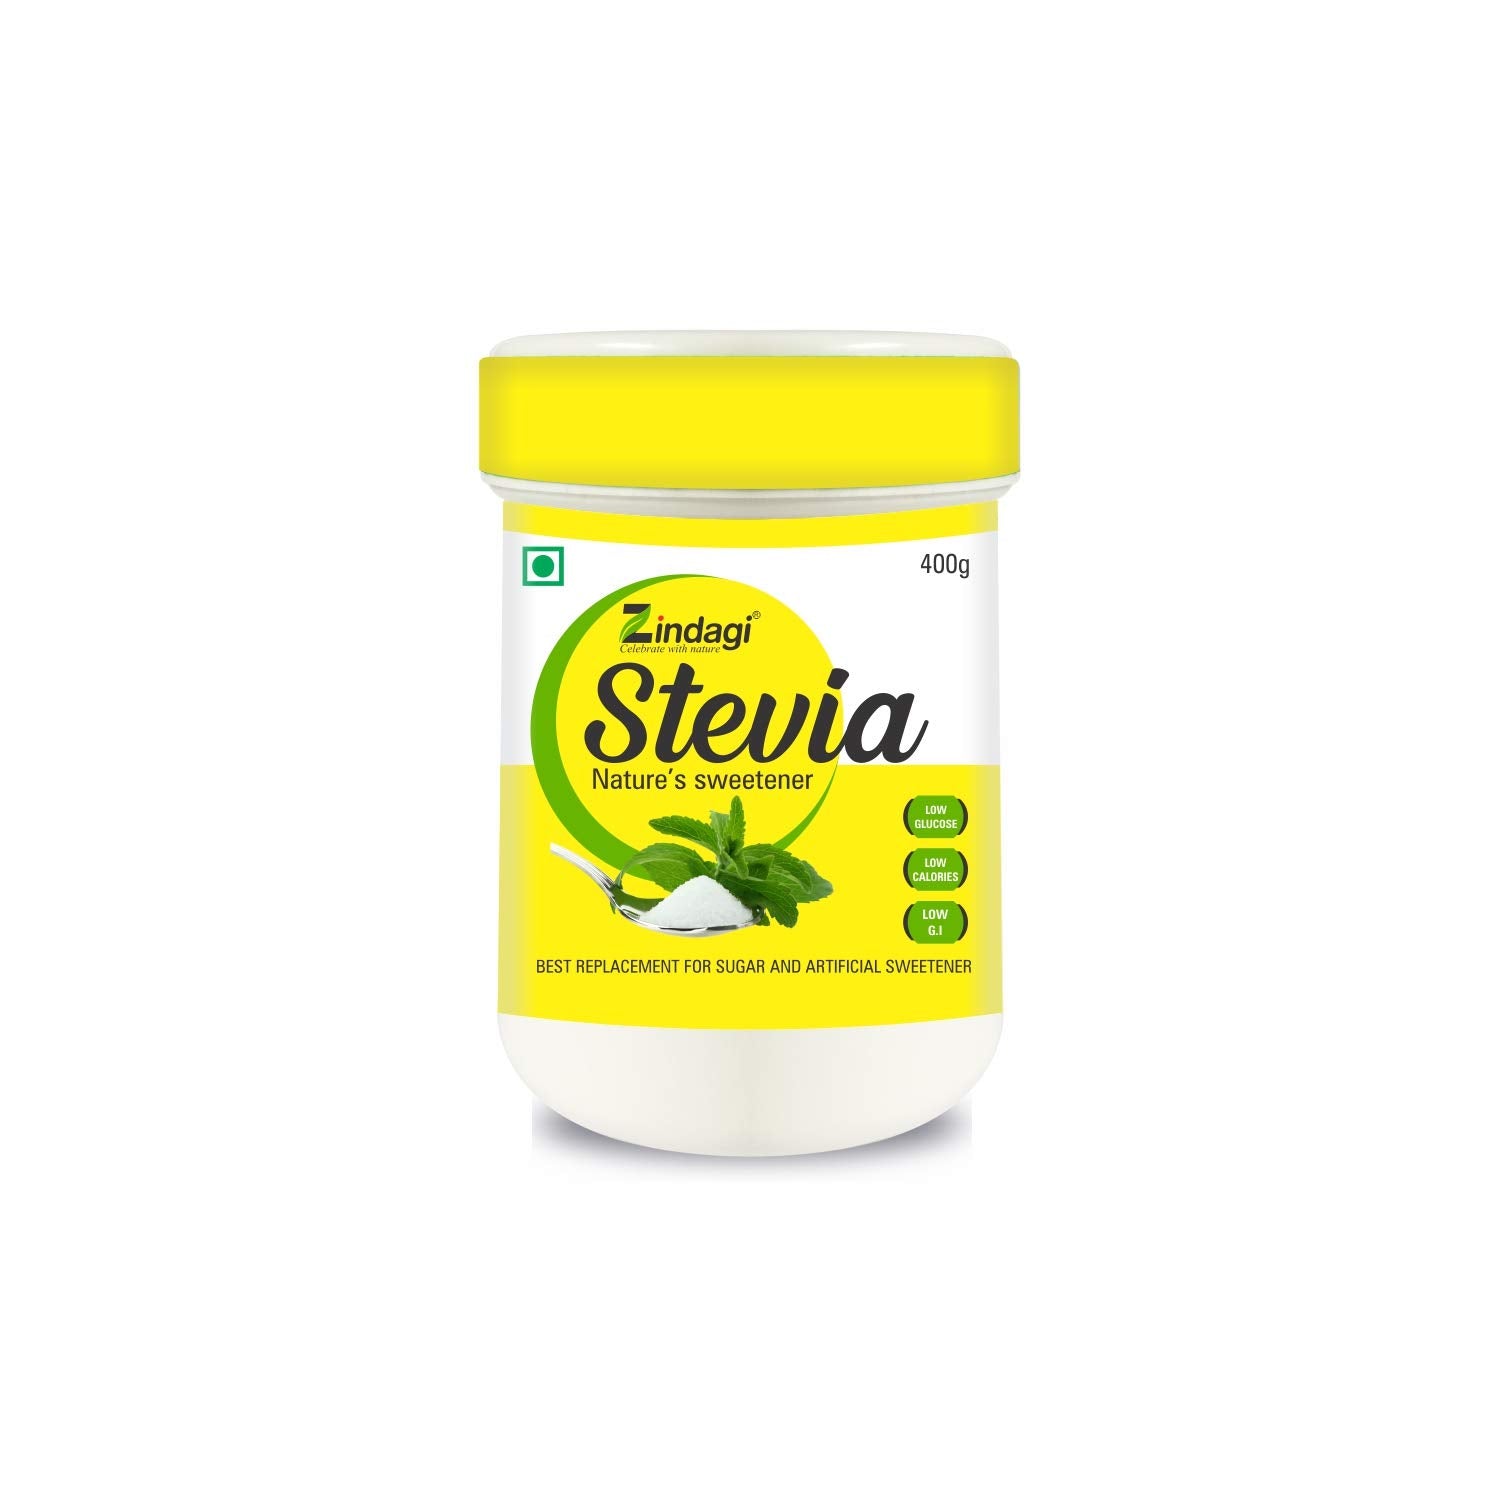 Zindagi Stevia Nature's Sweetener Powder 400g